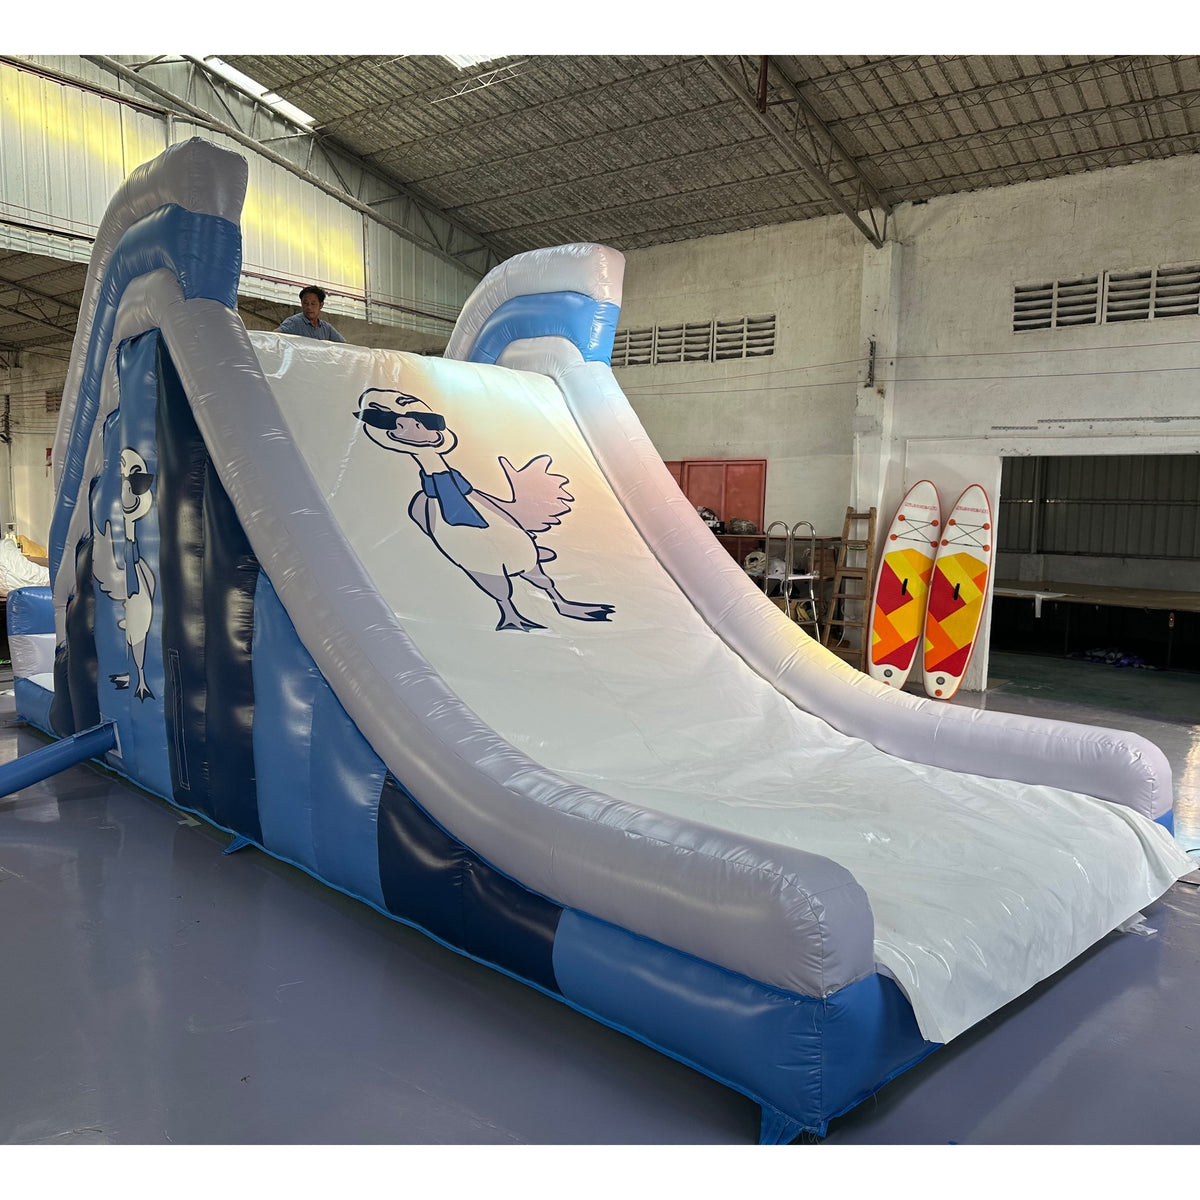 Inflatable Slip-n-Slide RuggedX™